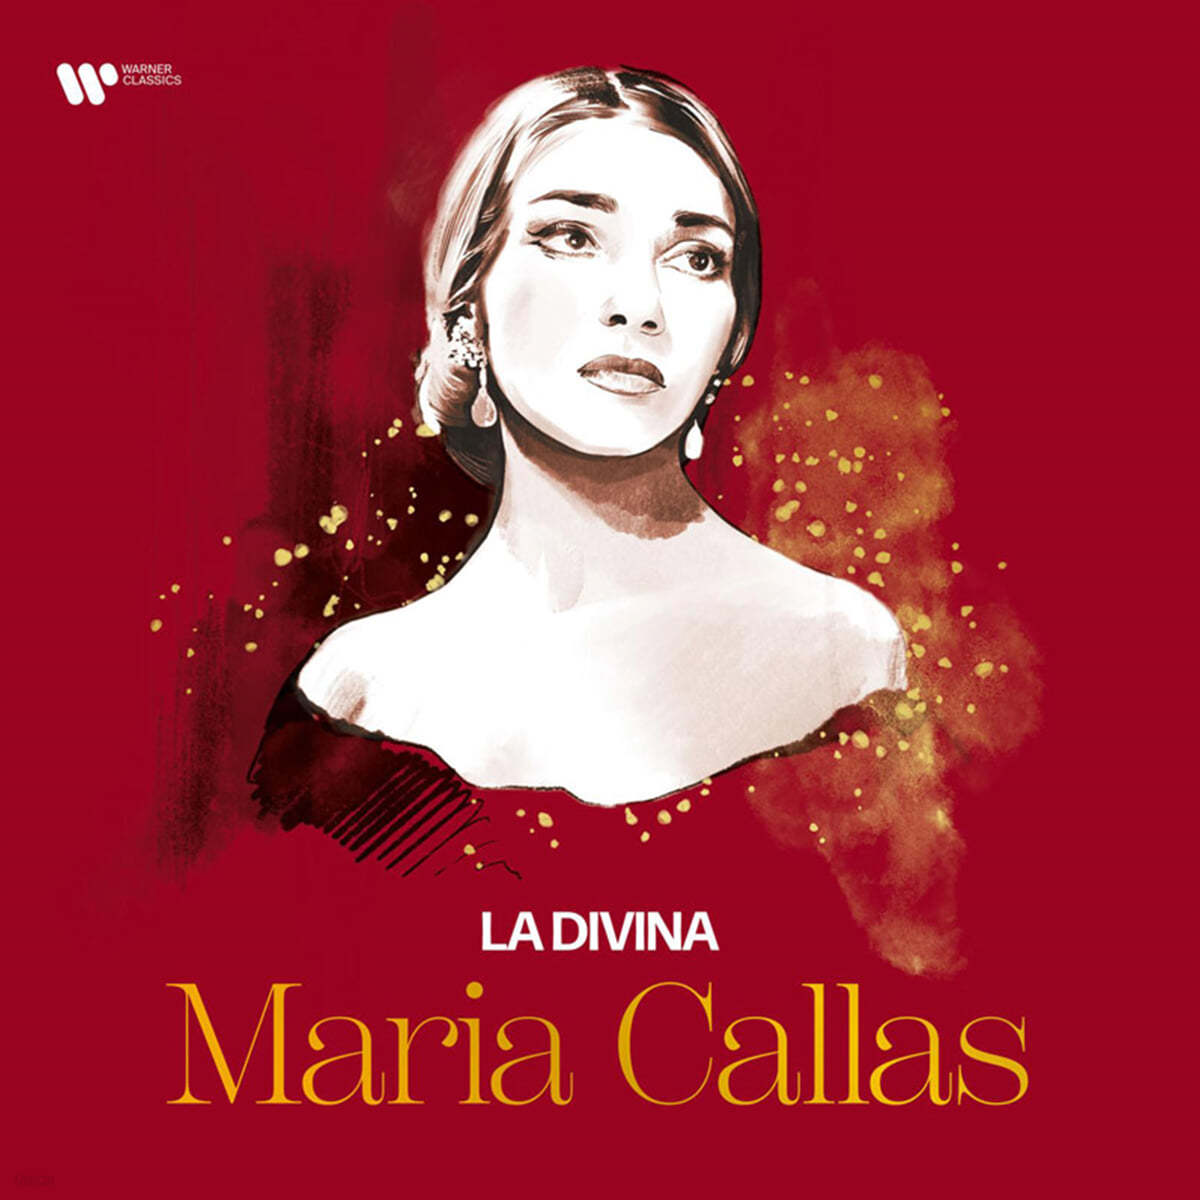 Maria Callas 마리아 칼라스 베스트 - 라 디비나 (La Divina) [레드 컬러 LP]